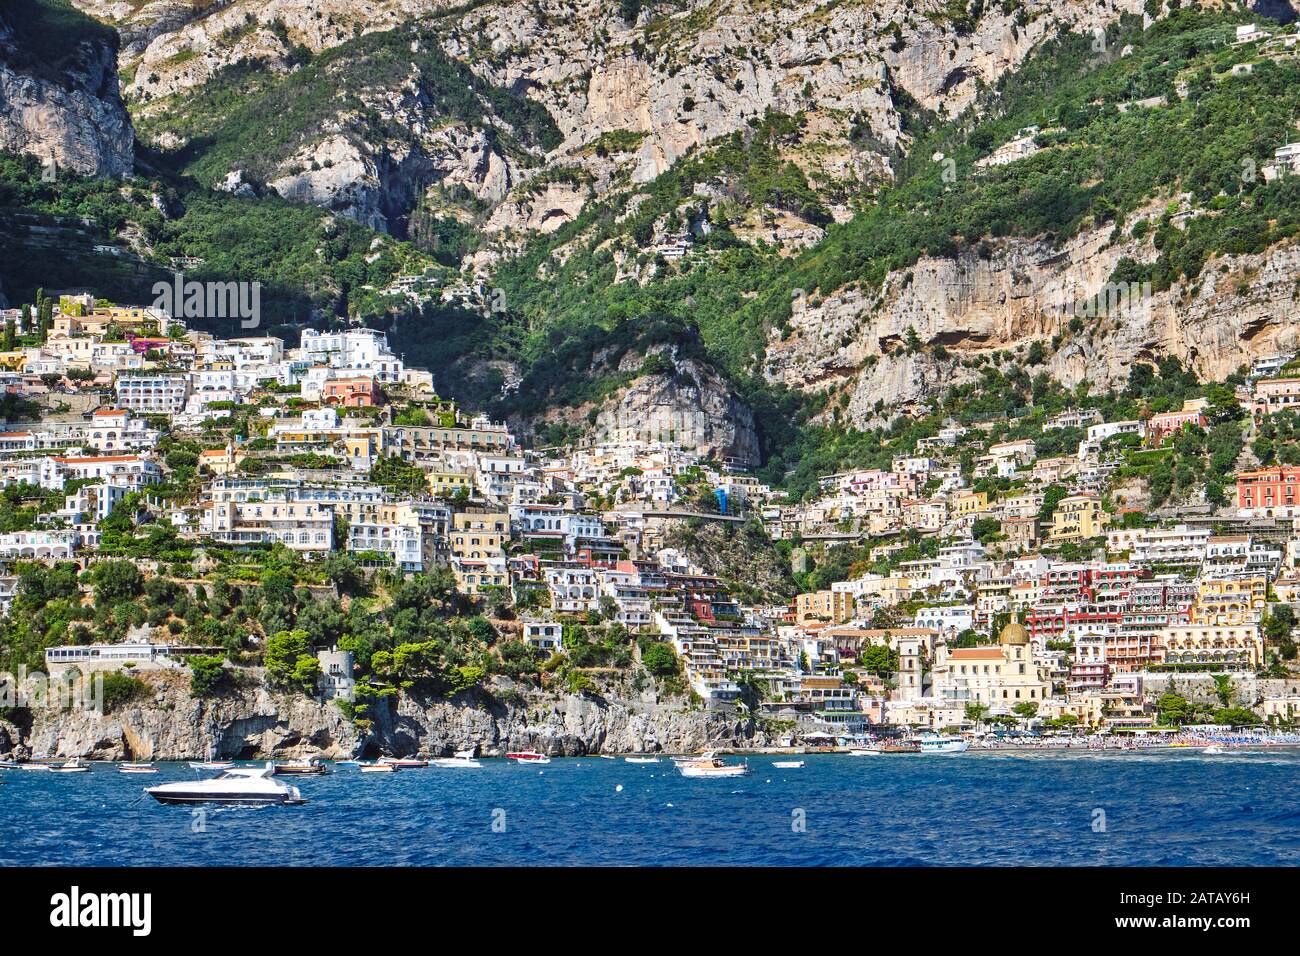 View of Positano on the italian Amalfi Coast from the sea Stock Photo